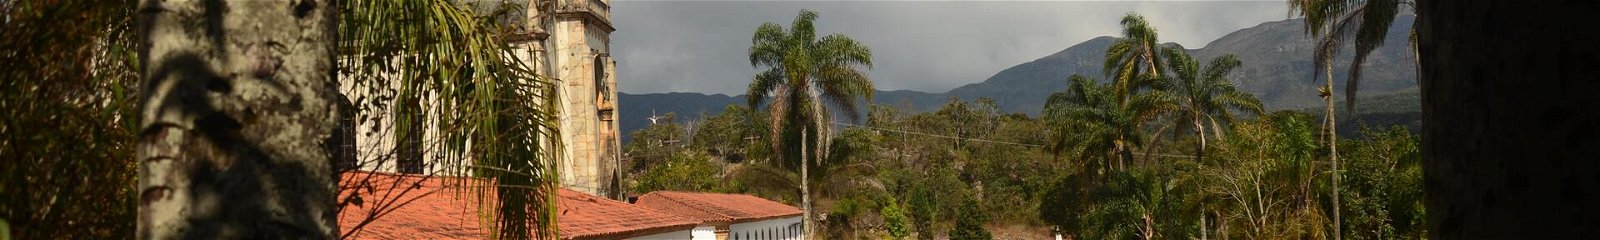 Vacation rental in São Miguel